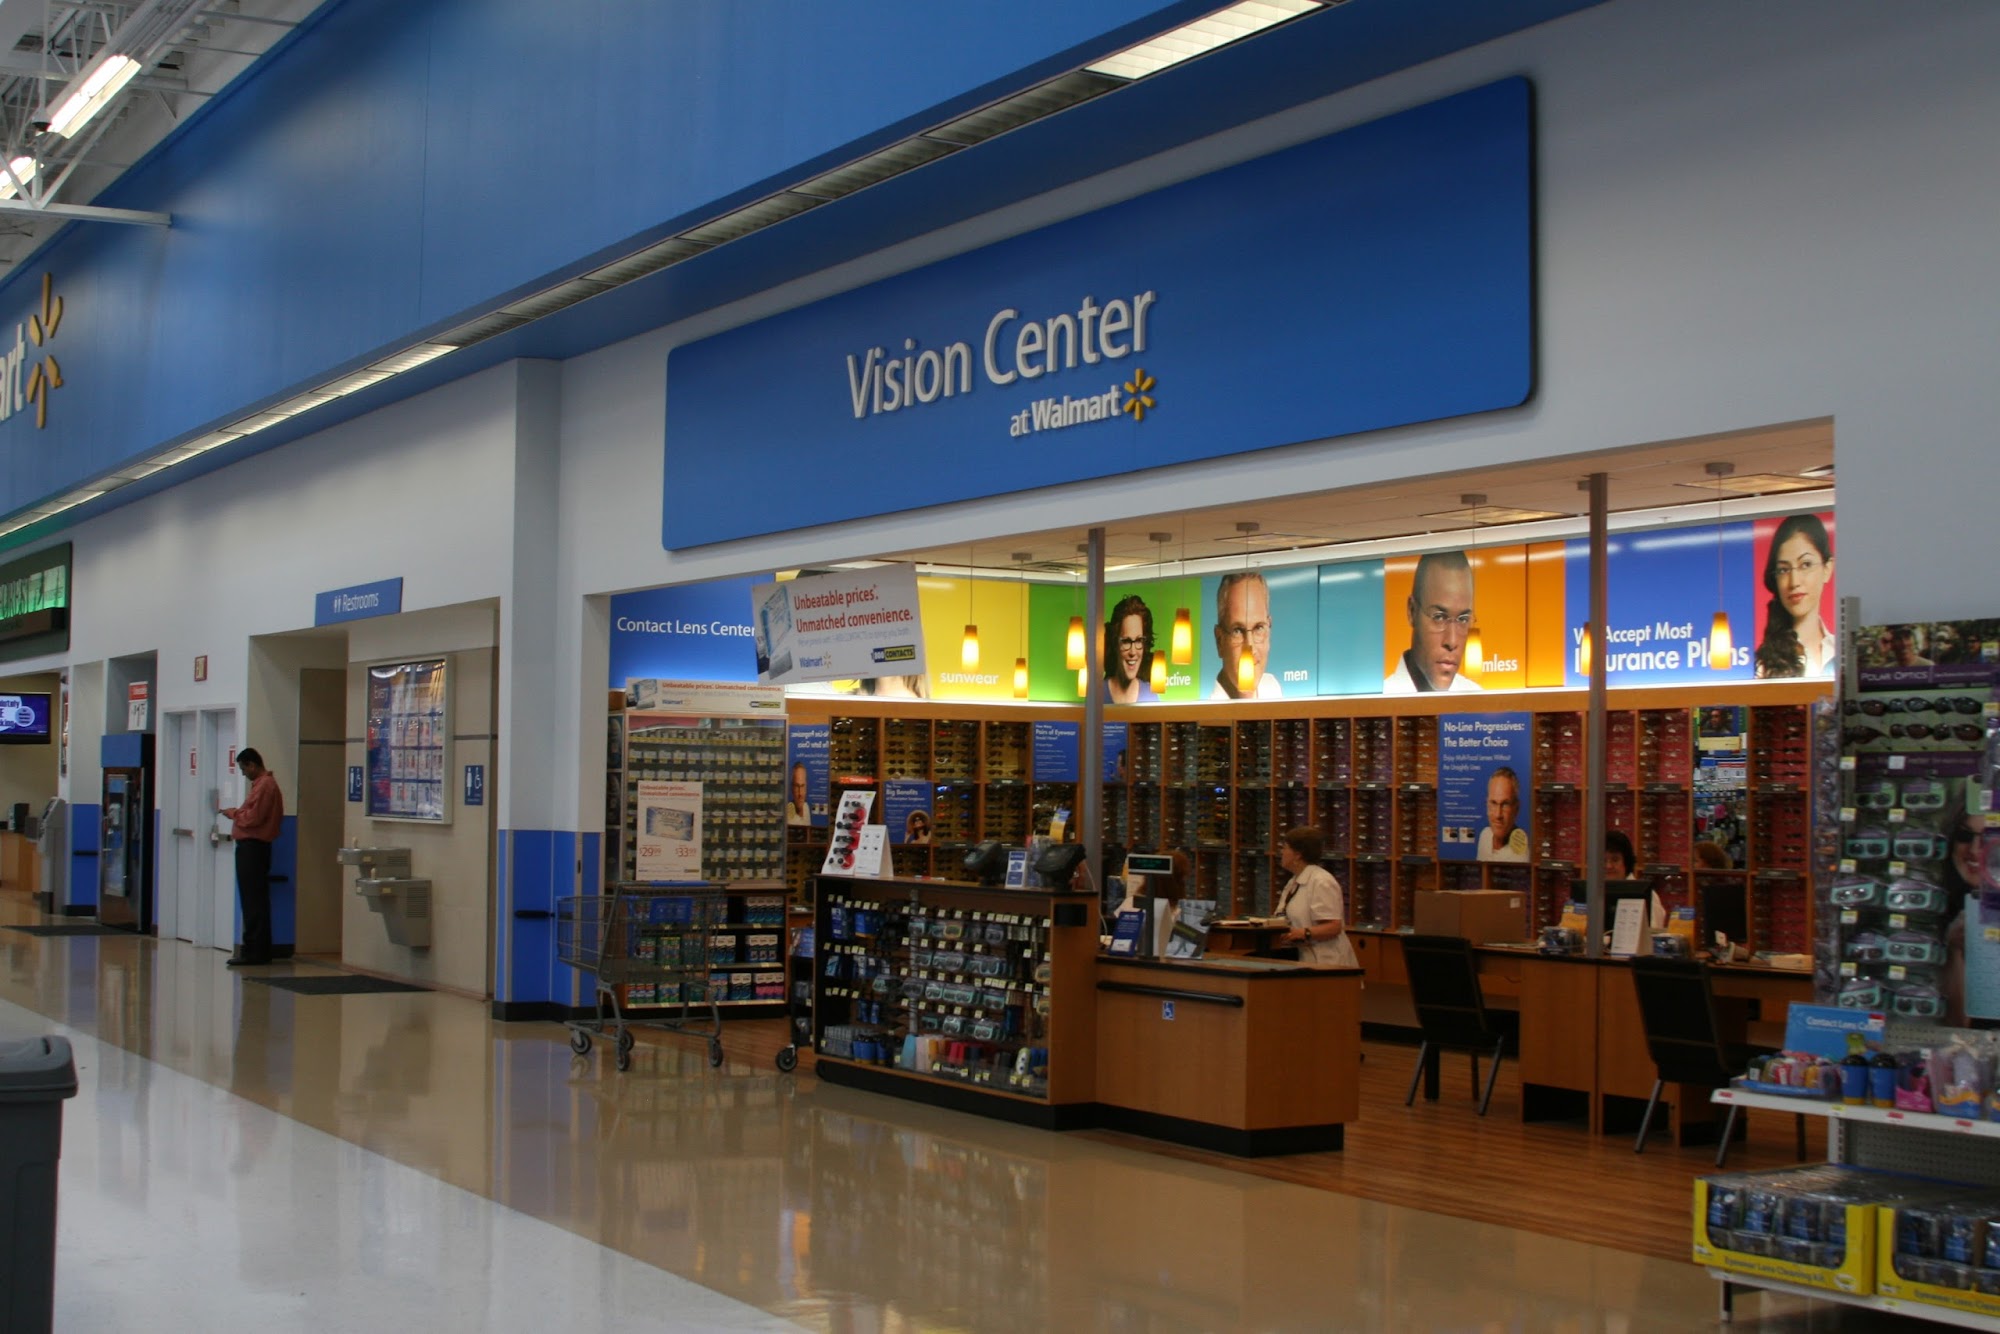 Walmart Vision & Glasses 810 N Hwy, Colville Washington 99114